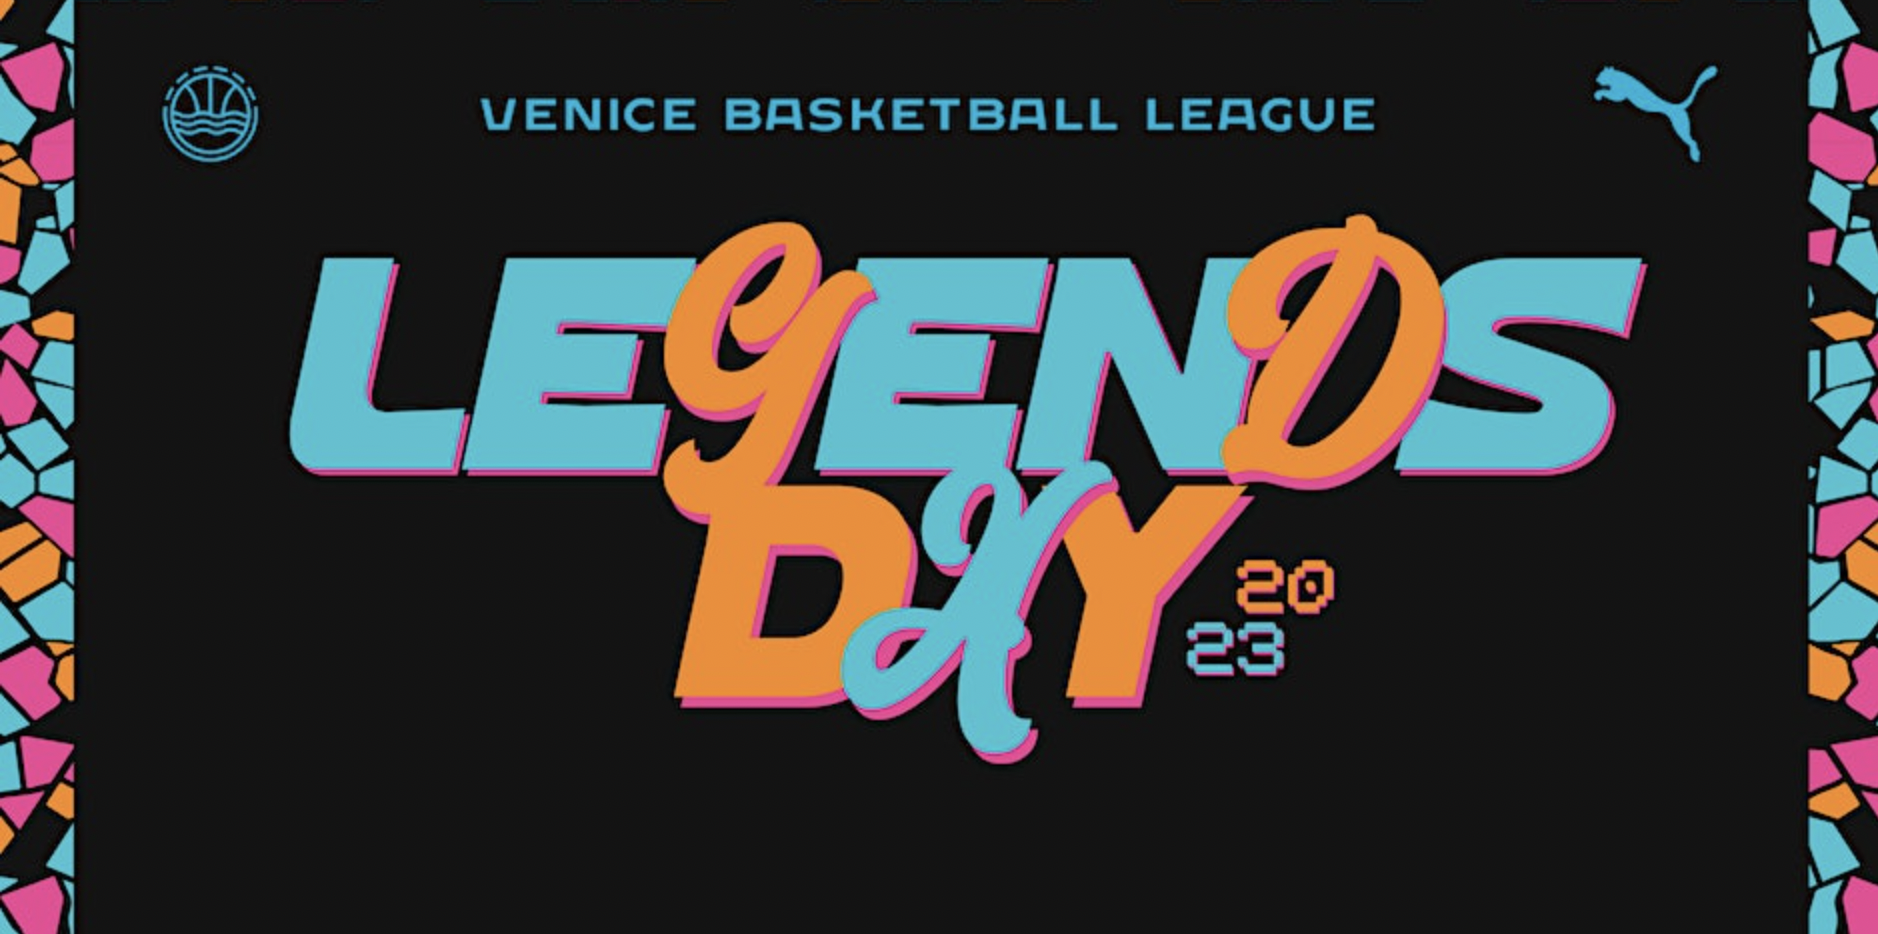 Venice Basketball League Legends Day